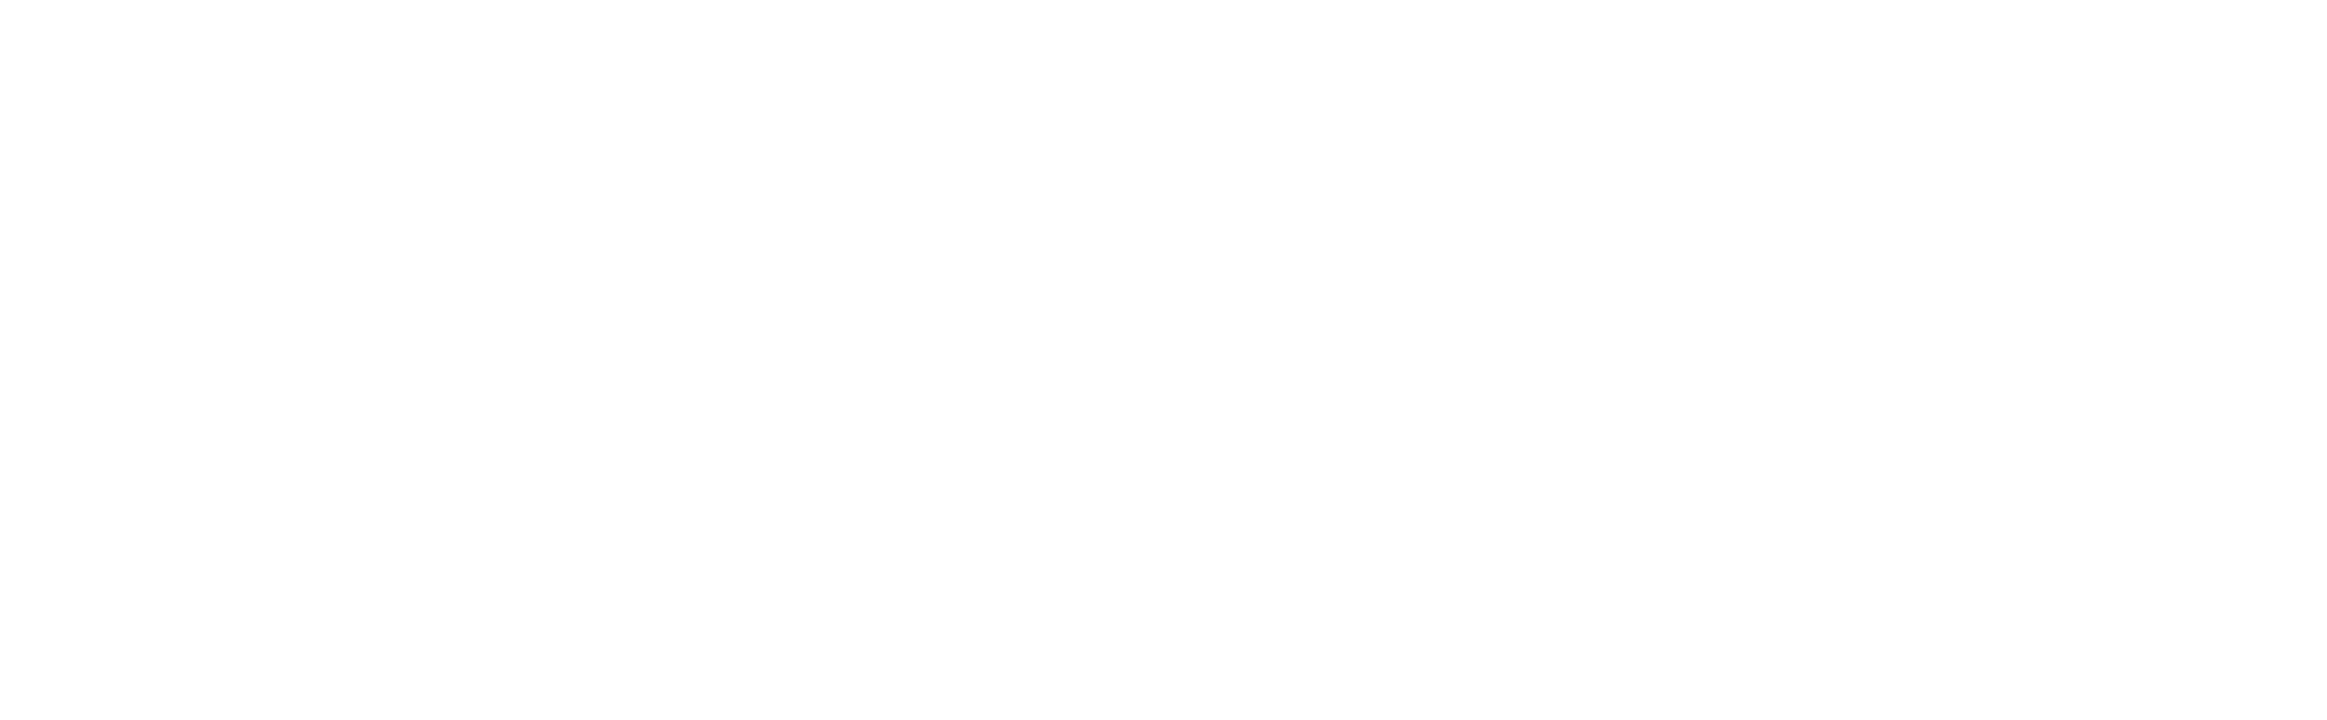 Ottawa Music Industry Coalition Logo